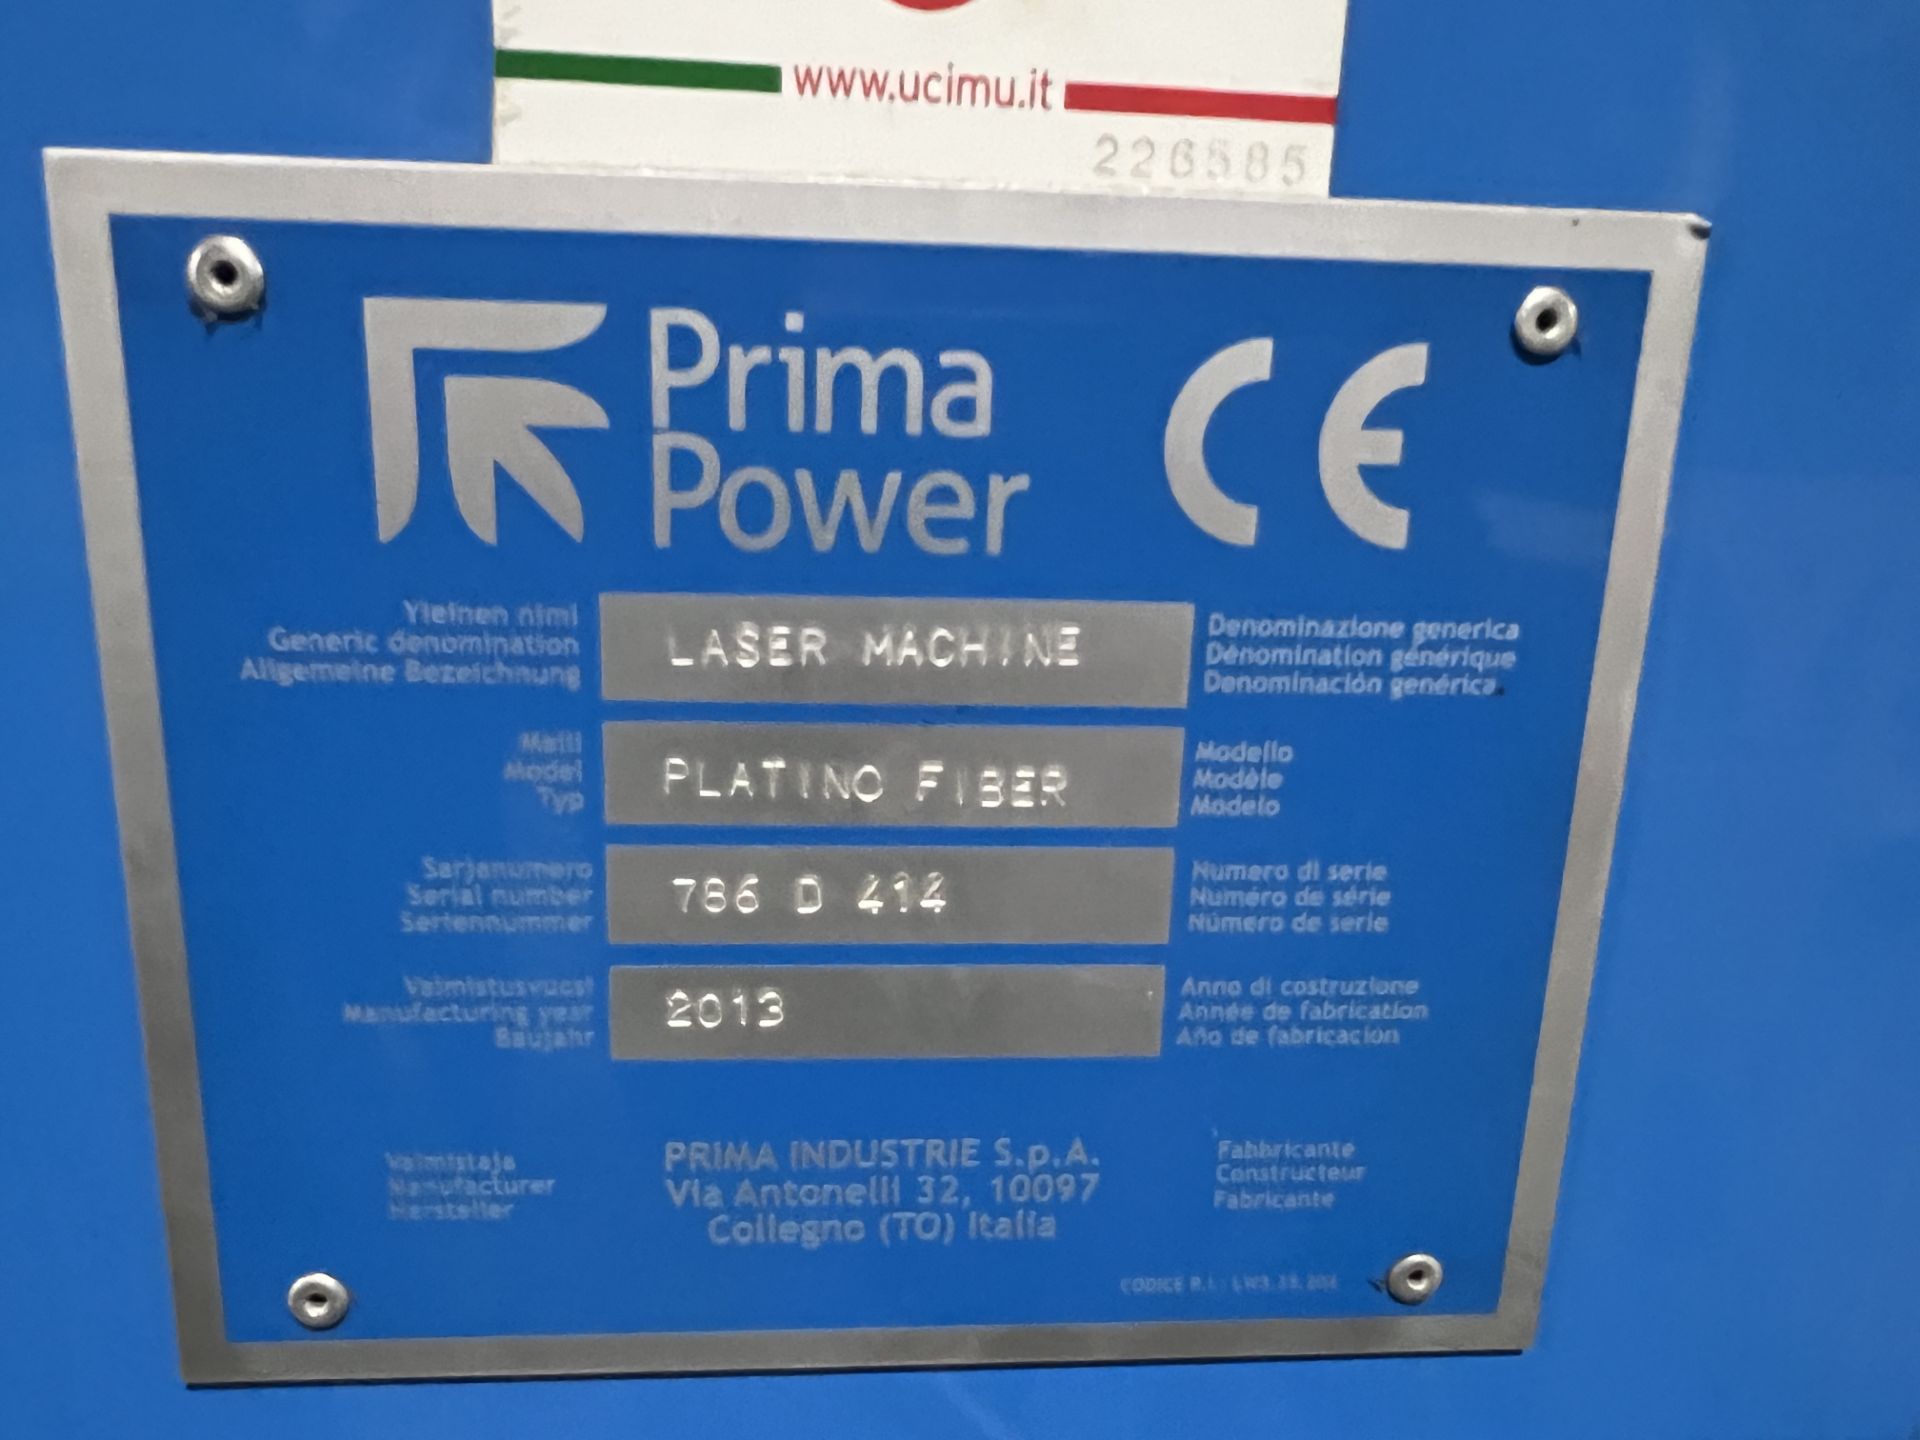 Prima Power Platino 2 kW CNC Fiber Laser, S/N 786D414, 2013 - Image 23 of 28